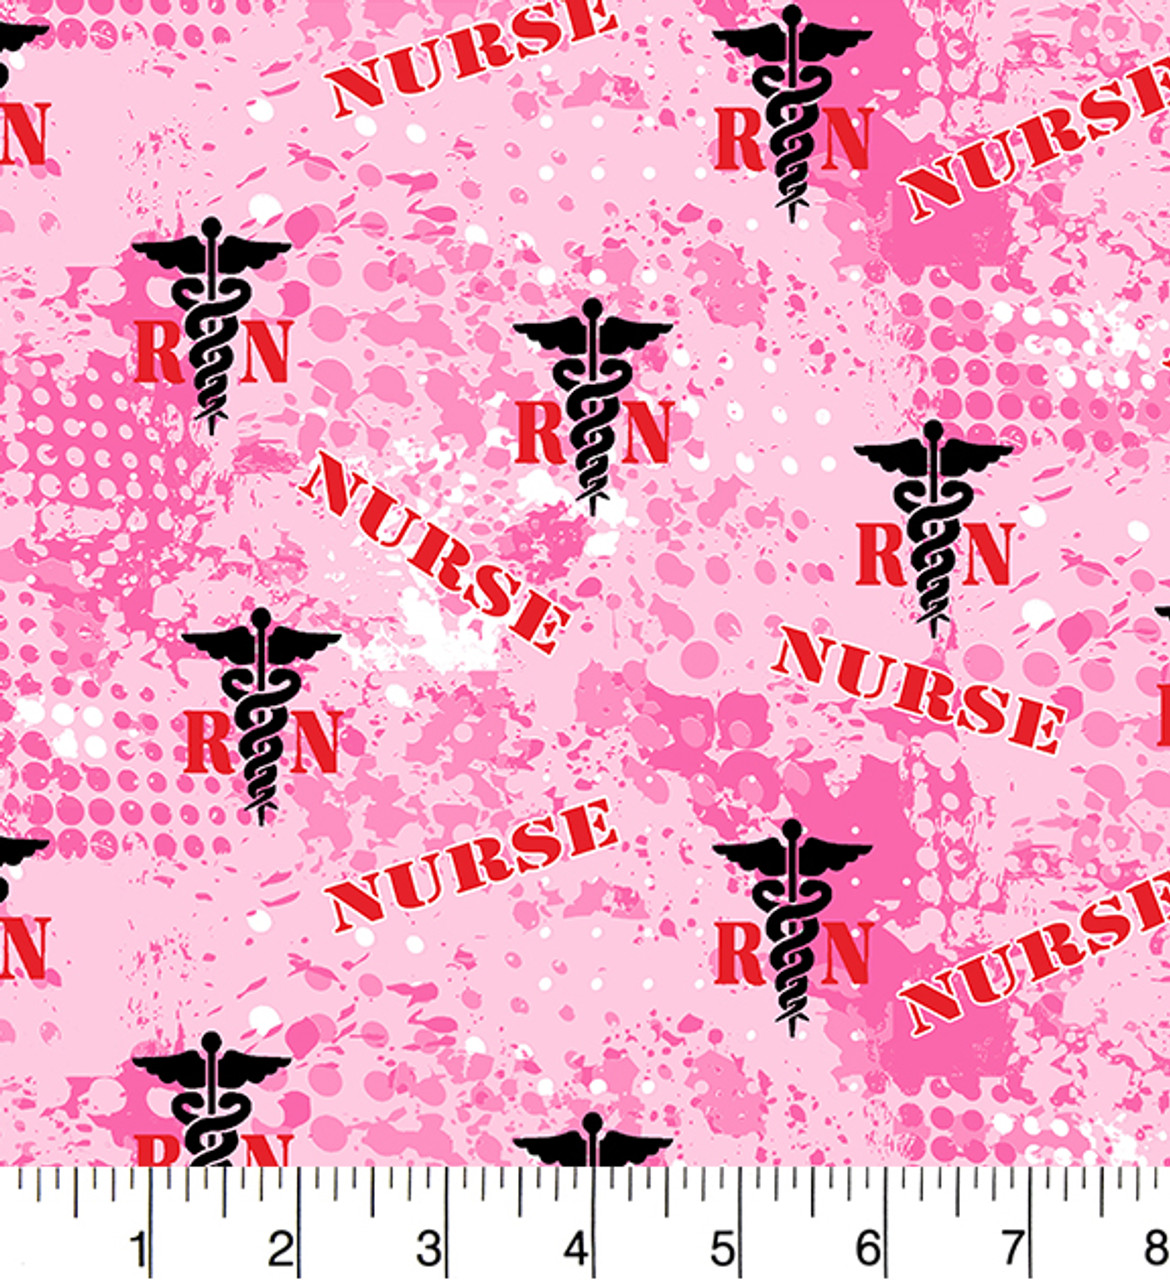 Nurse Cotton Fabric  Abstract Pink Nurses RN Quilting Cotton